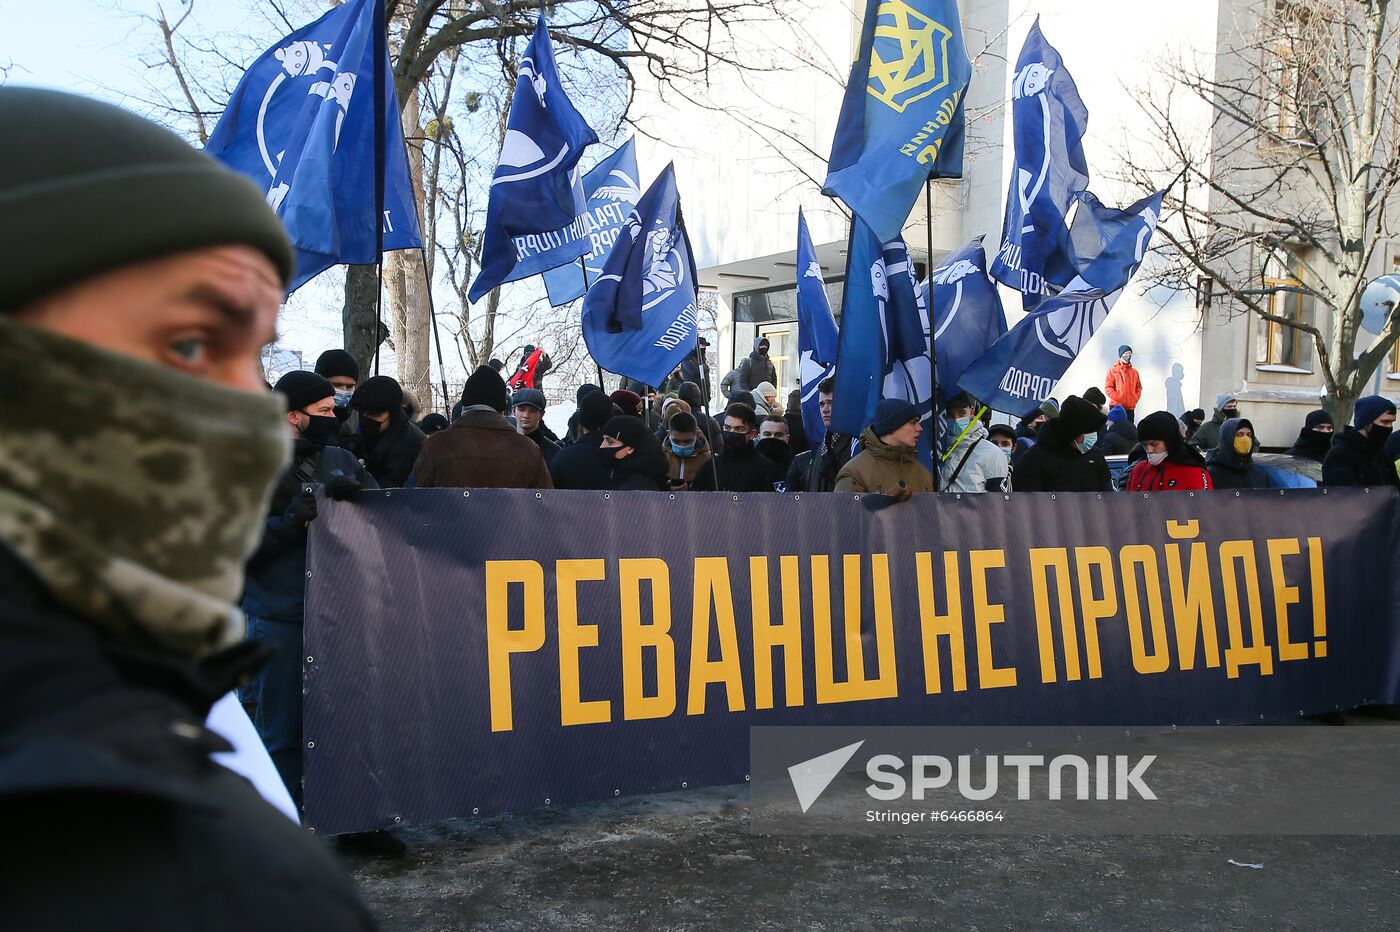 Ukraine TV Channels Rallies